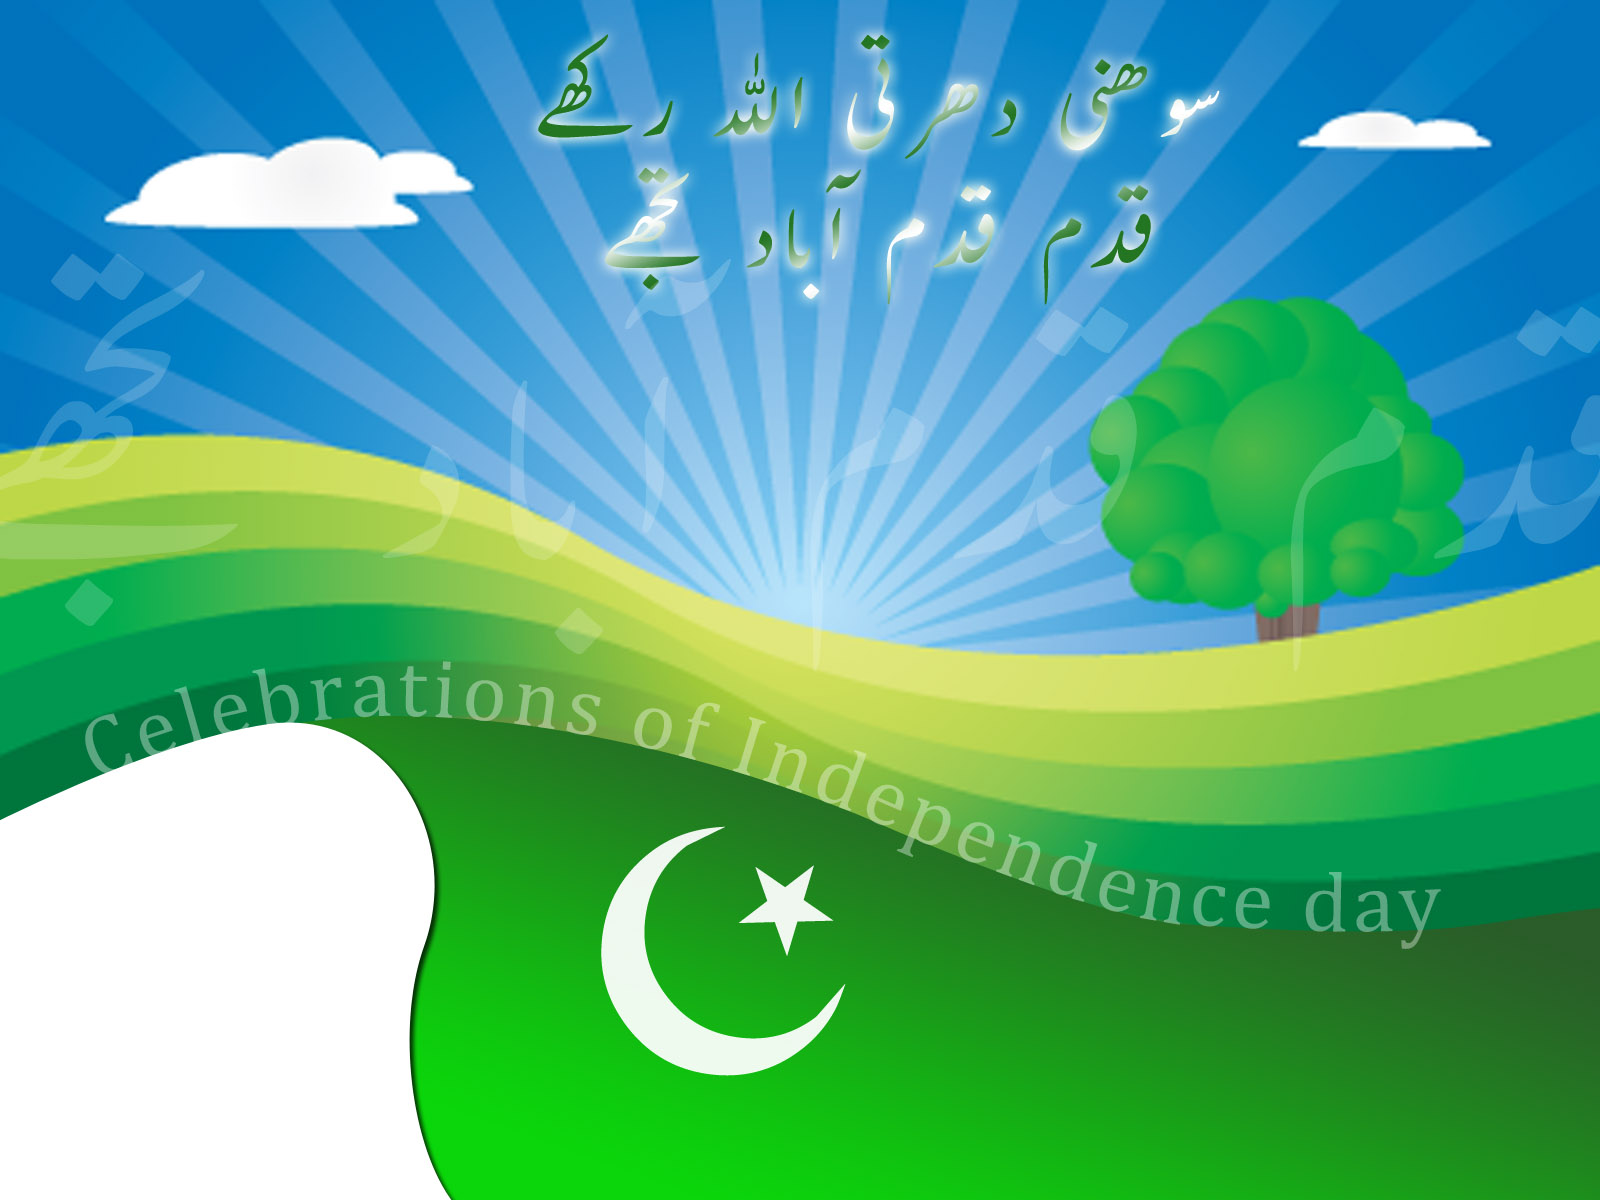 https://blogger.googleusercontent.com/img/b/R29vZ2xl/AVvXsEjFHPsjbDuJhihJgzmk5366mkktv27JDXzc3jzplmR2etH4dfjJ2utayeEwfWGwA1EMlwhPAdNSoXQfpbNcPoHsqy9xaLR4m6Ms1QNlsYfF8NboN4-Uyy0QdOxDFnmfhuQkwuX7i6j6y_Y/s1600/14+August+Pakistan+Indefendence+Day+card+greeting+psupero+%25283%2529.jpg